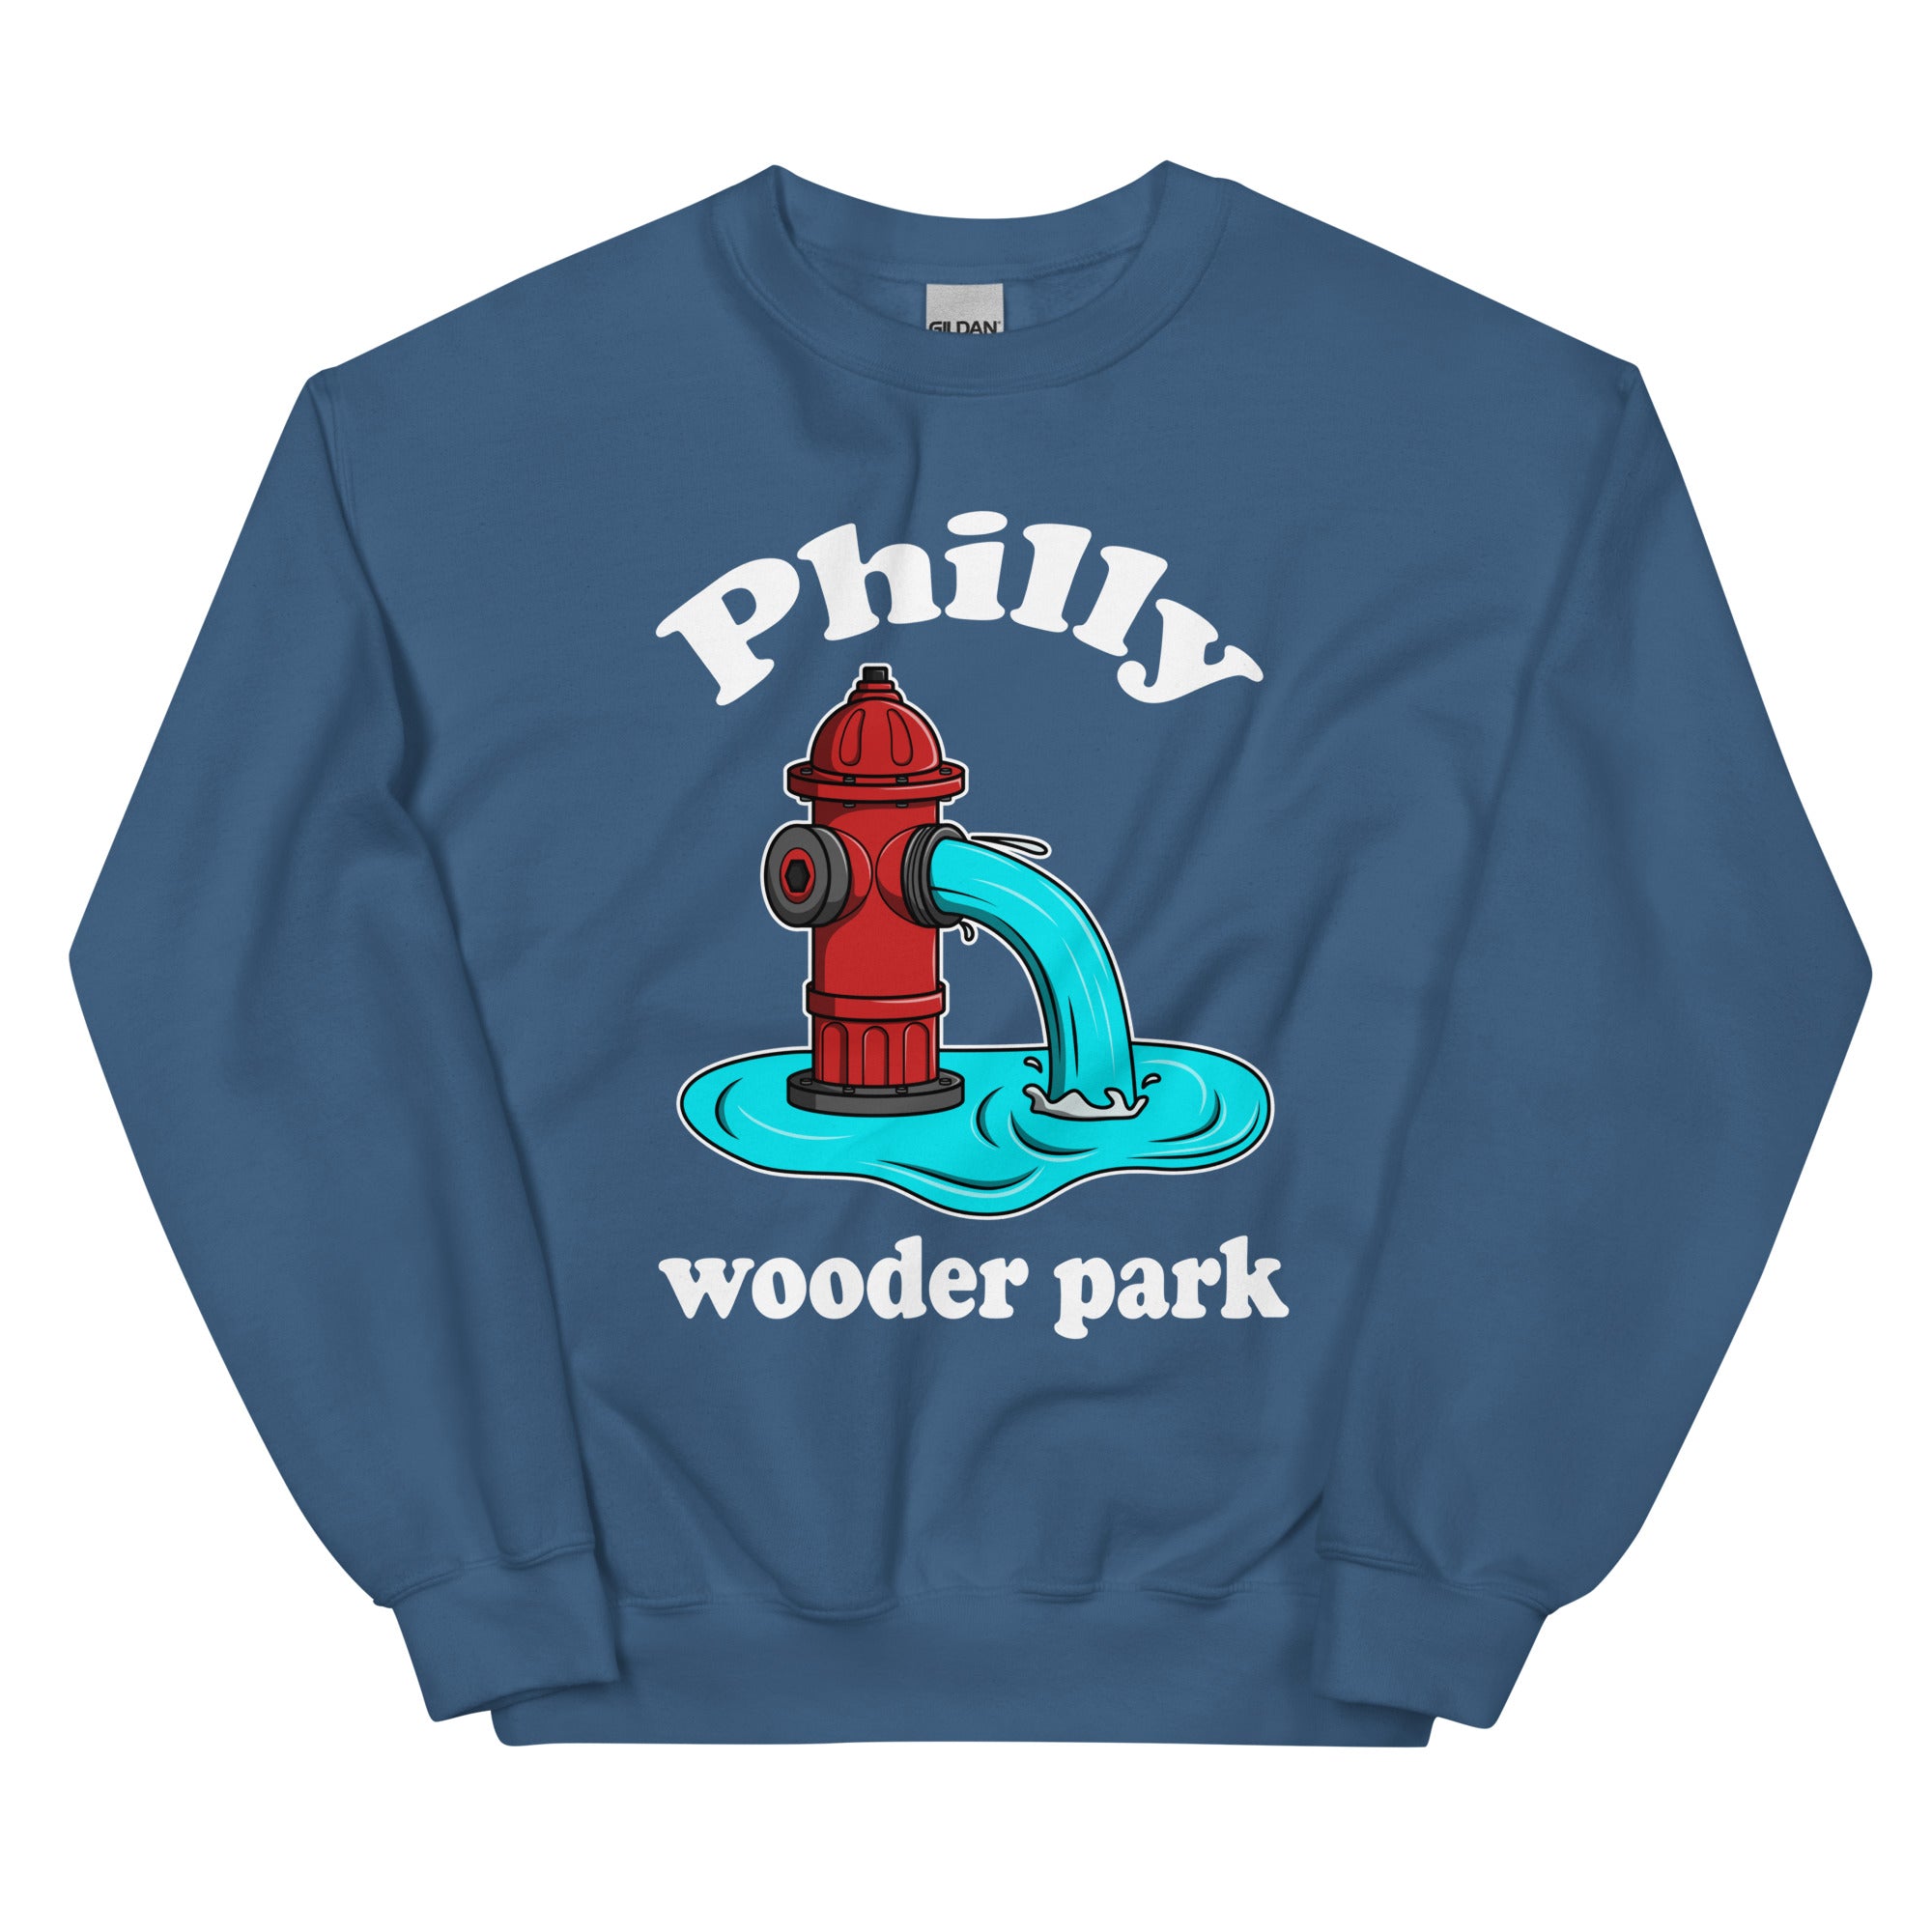 Philadelphia Philly wooder park fire hydrant funny indigo blue sweatshirt Phillygoat